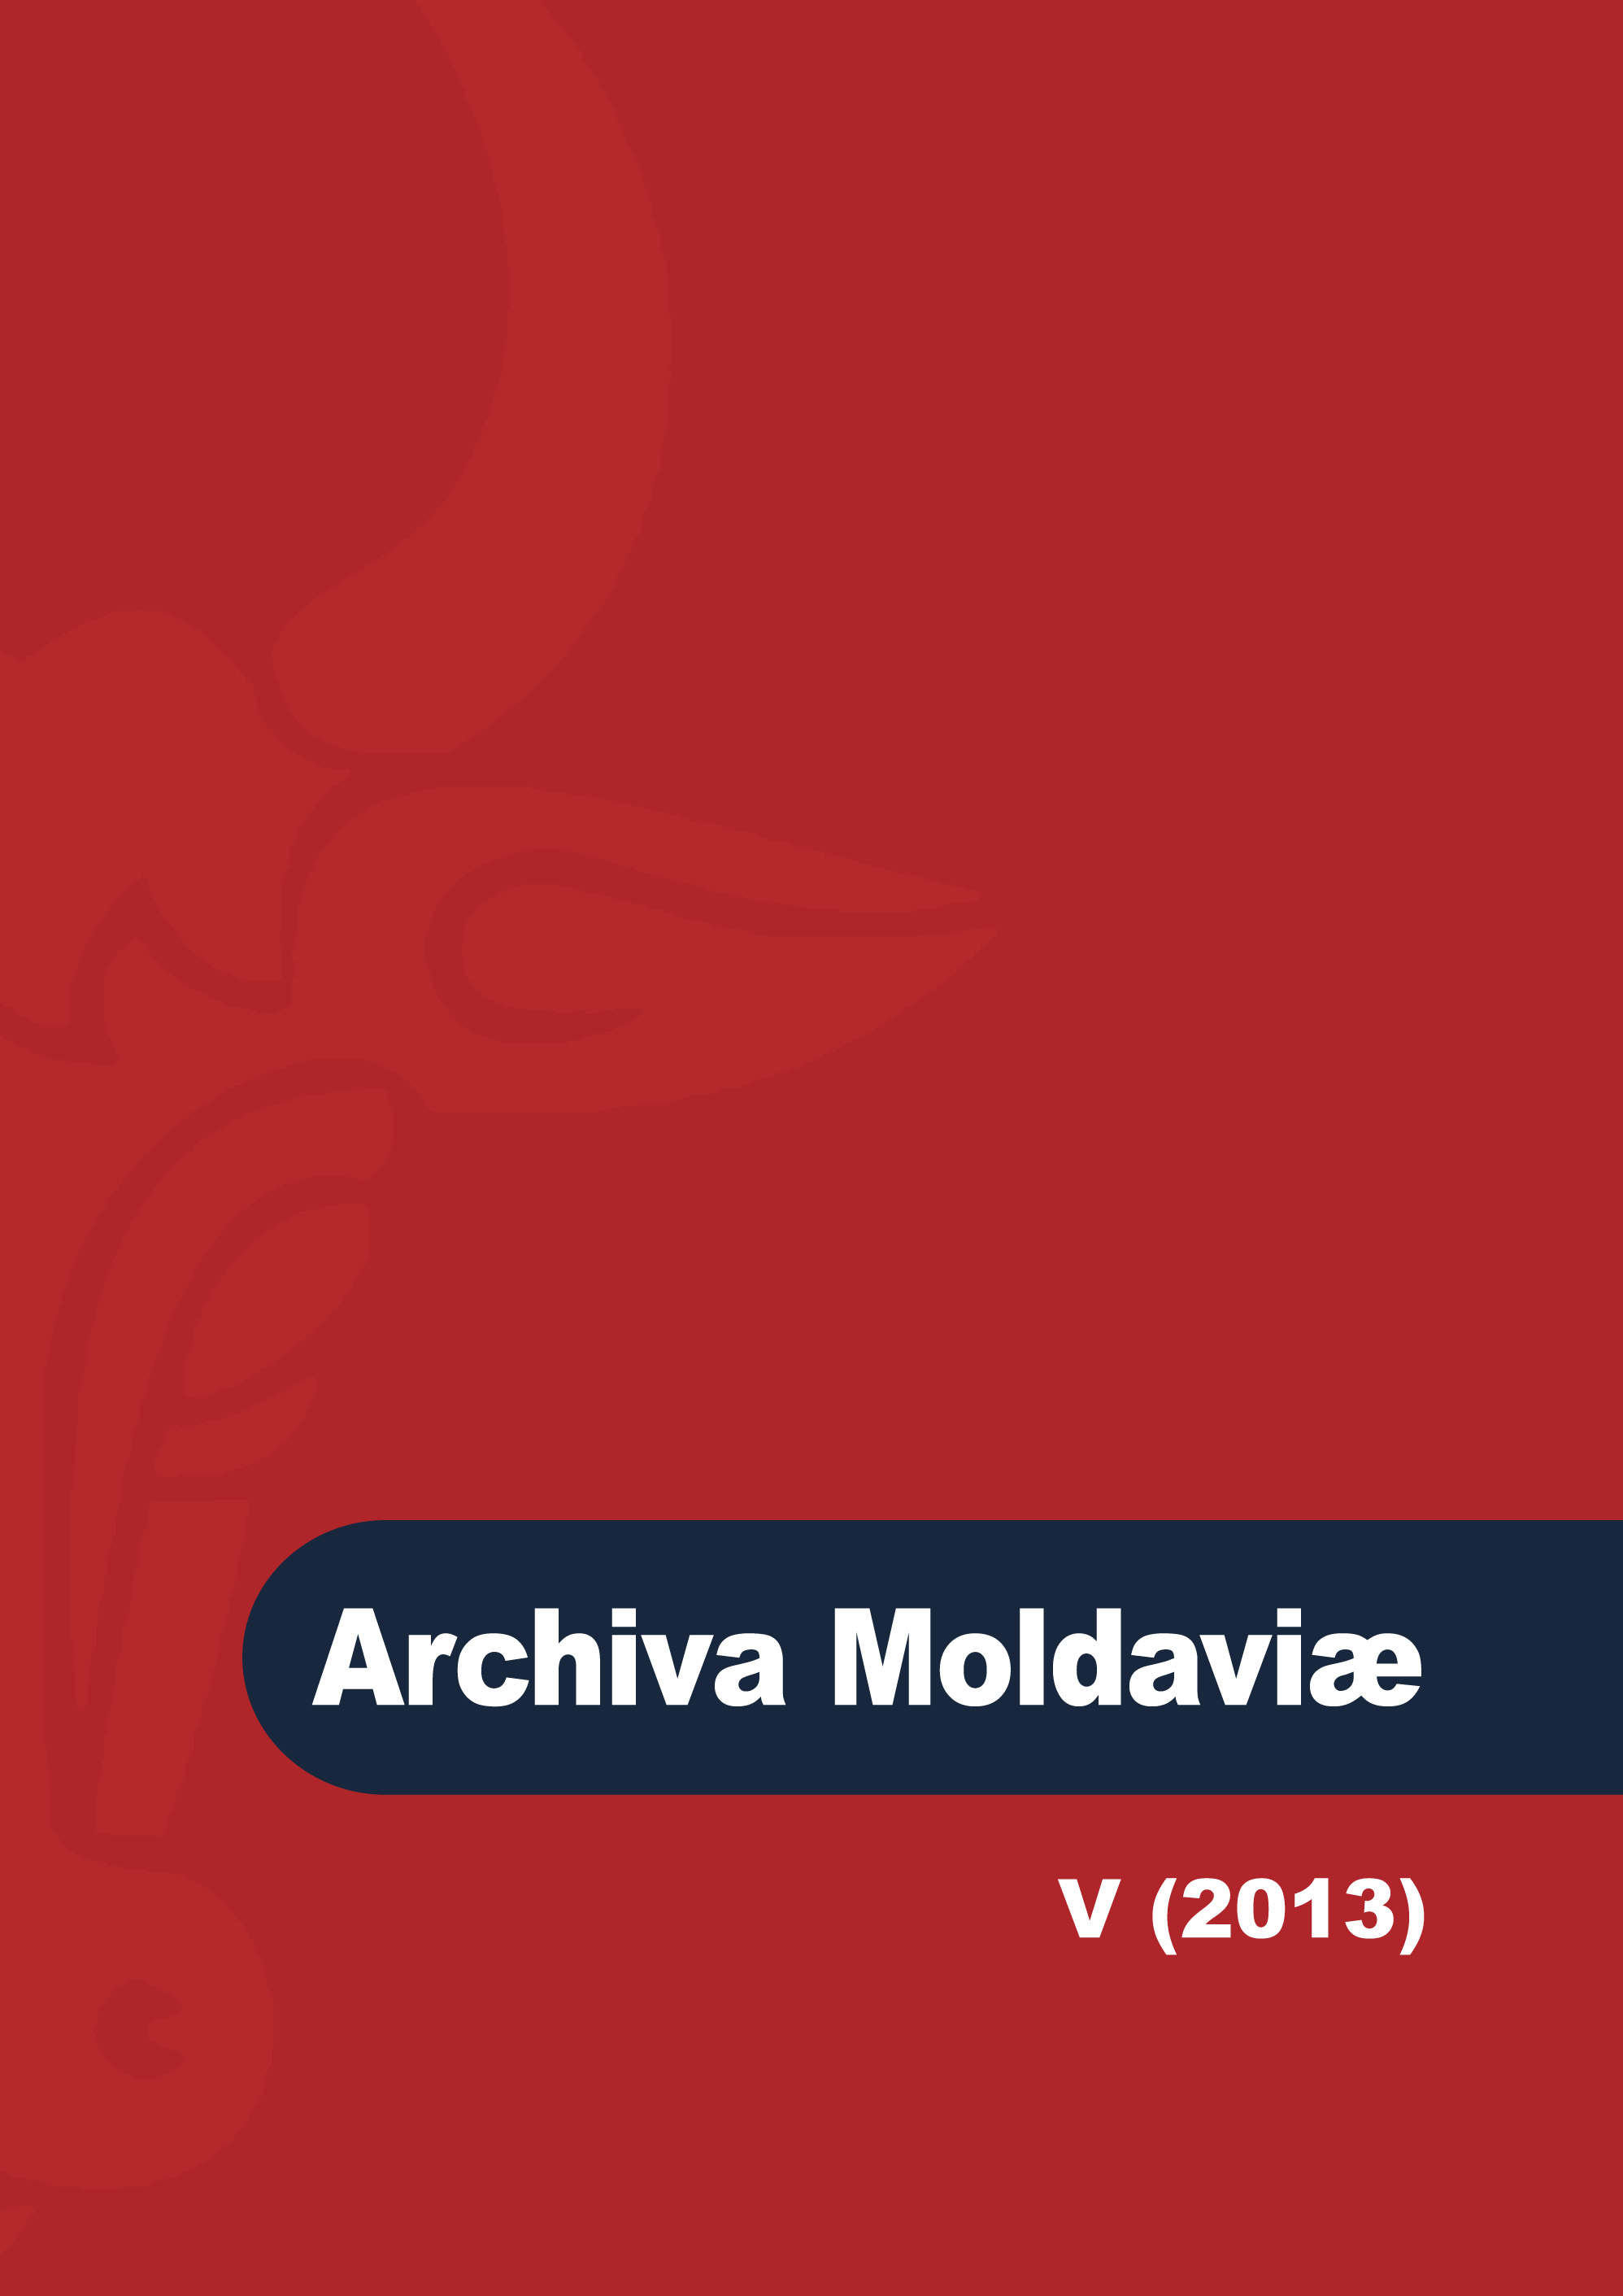 Where was buried the first Metropolitan of Moldavia? Cover Image